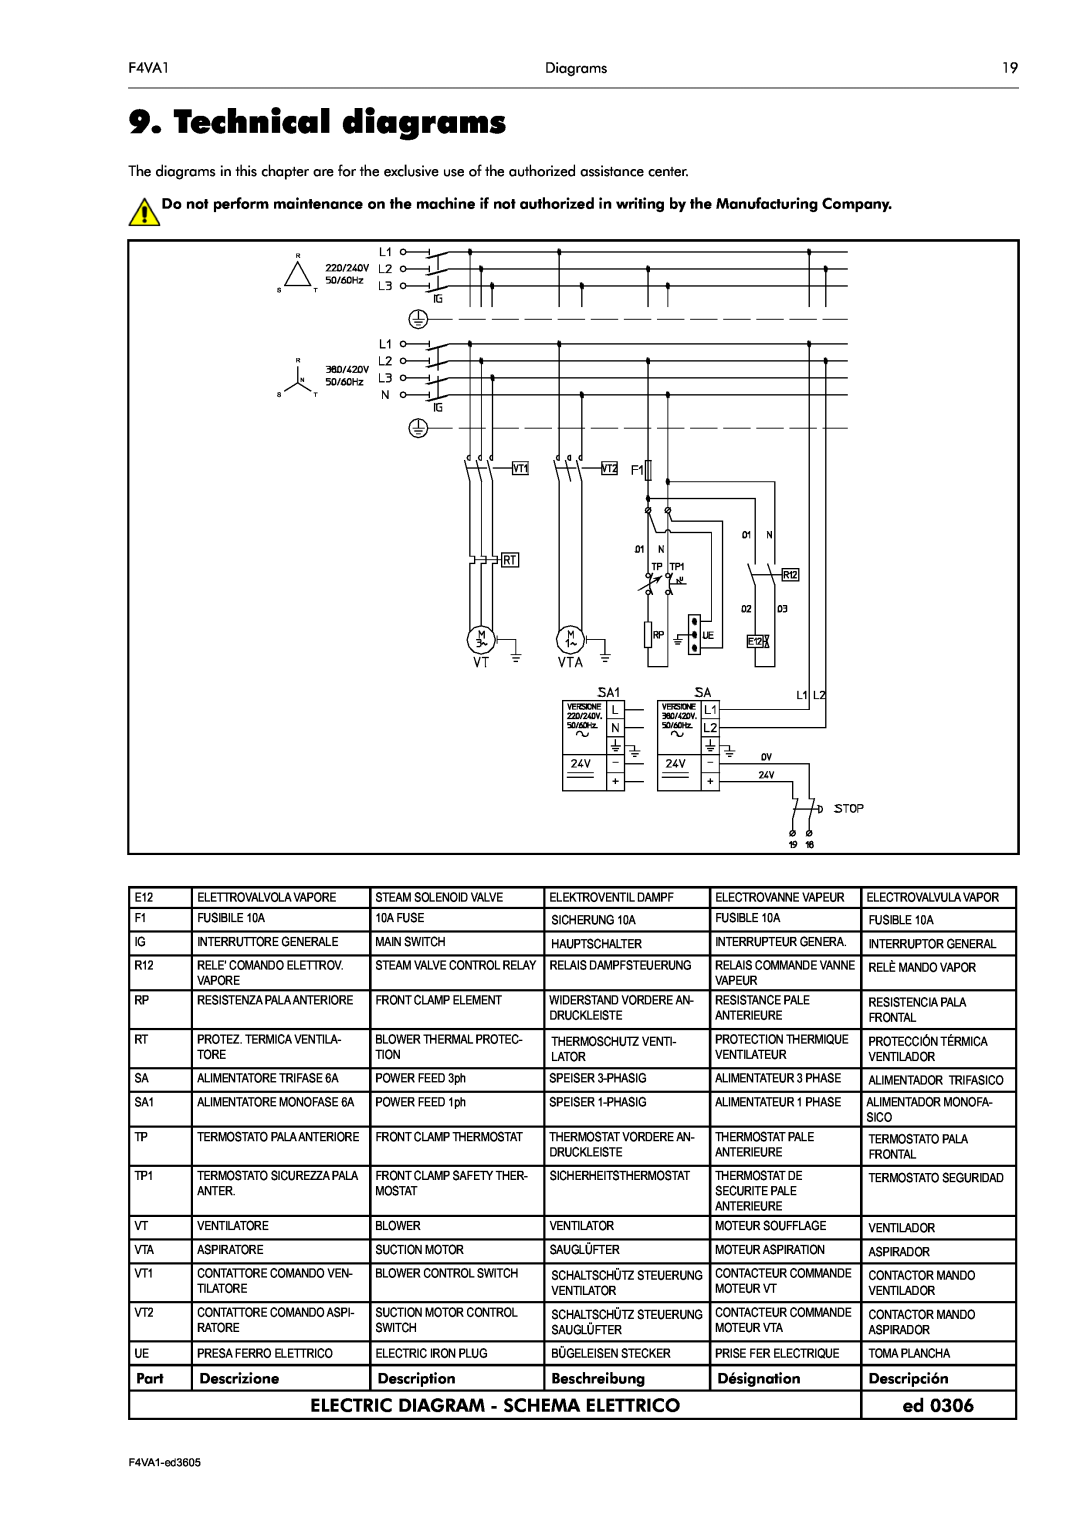 Electrolux F4VA1 manual Technical diagrams, Electric Diagram - Schema Elettrico 